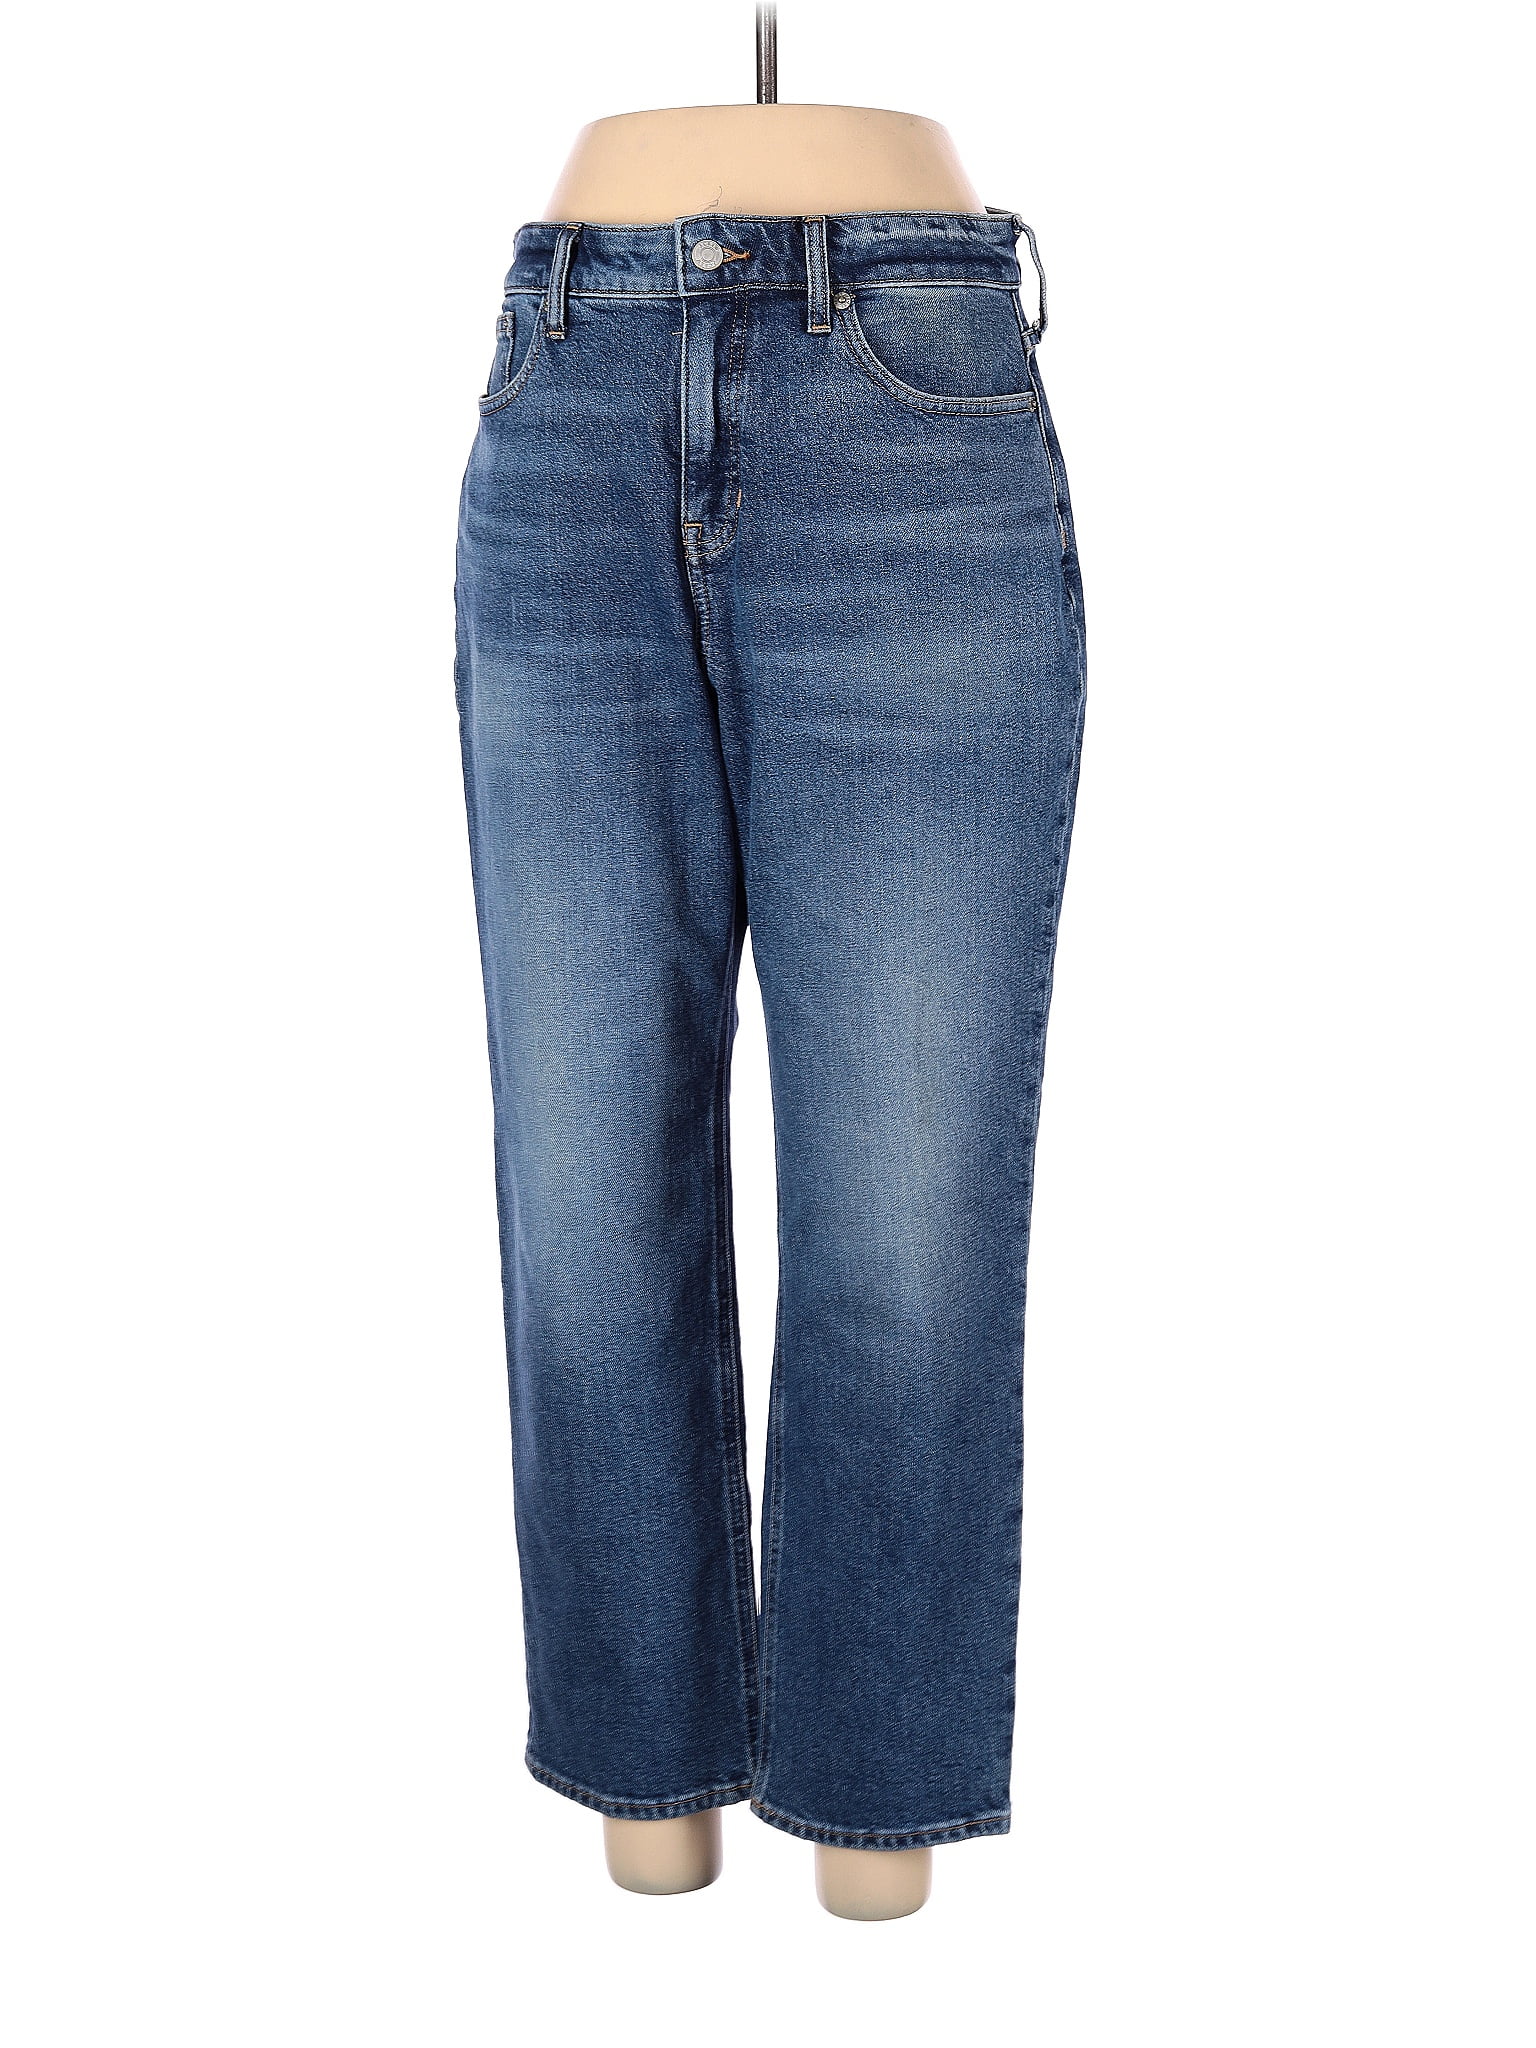 Unbranded Blue Jeans 29 Waist (Petite) - 62% off | thredUP